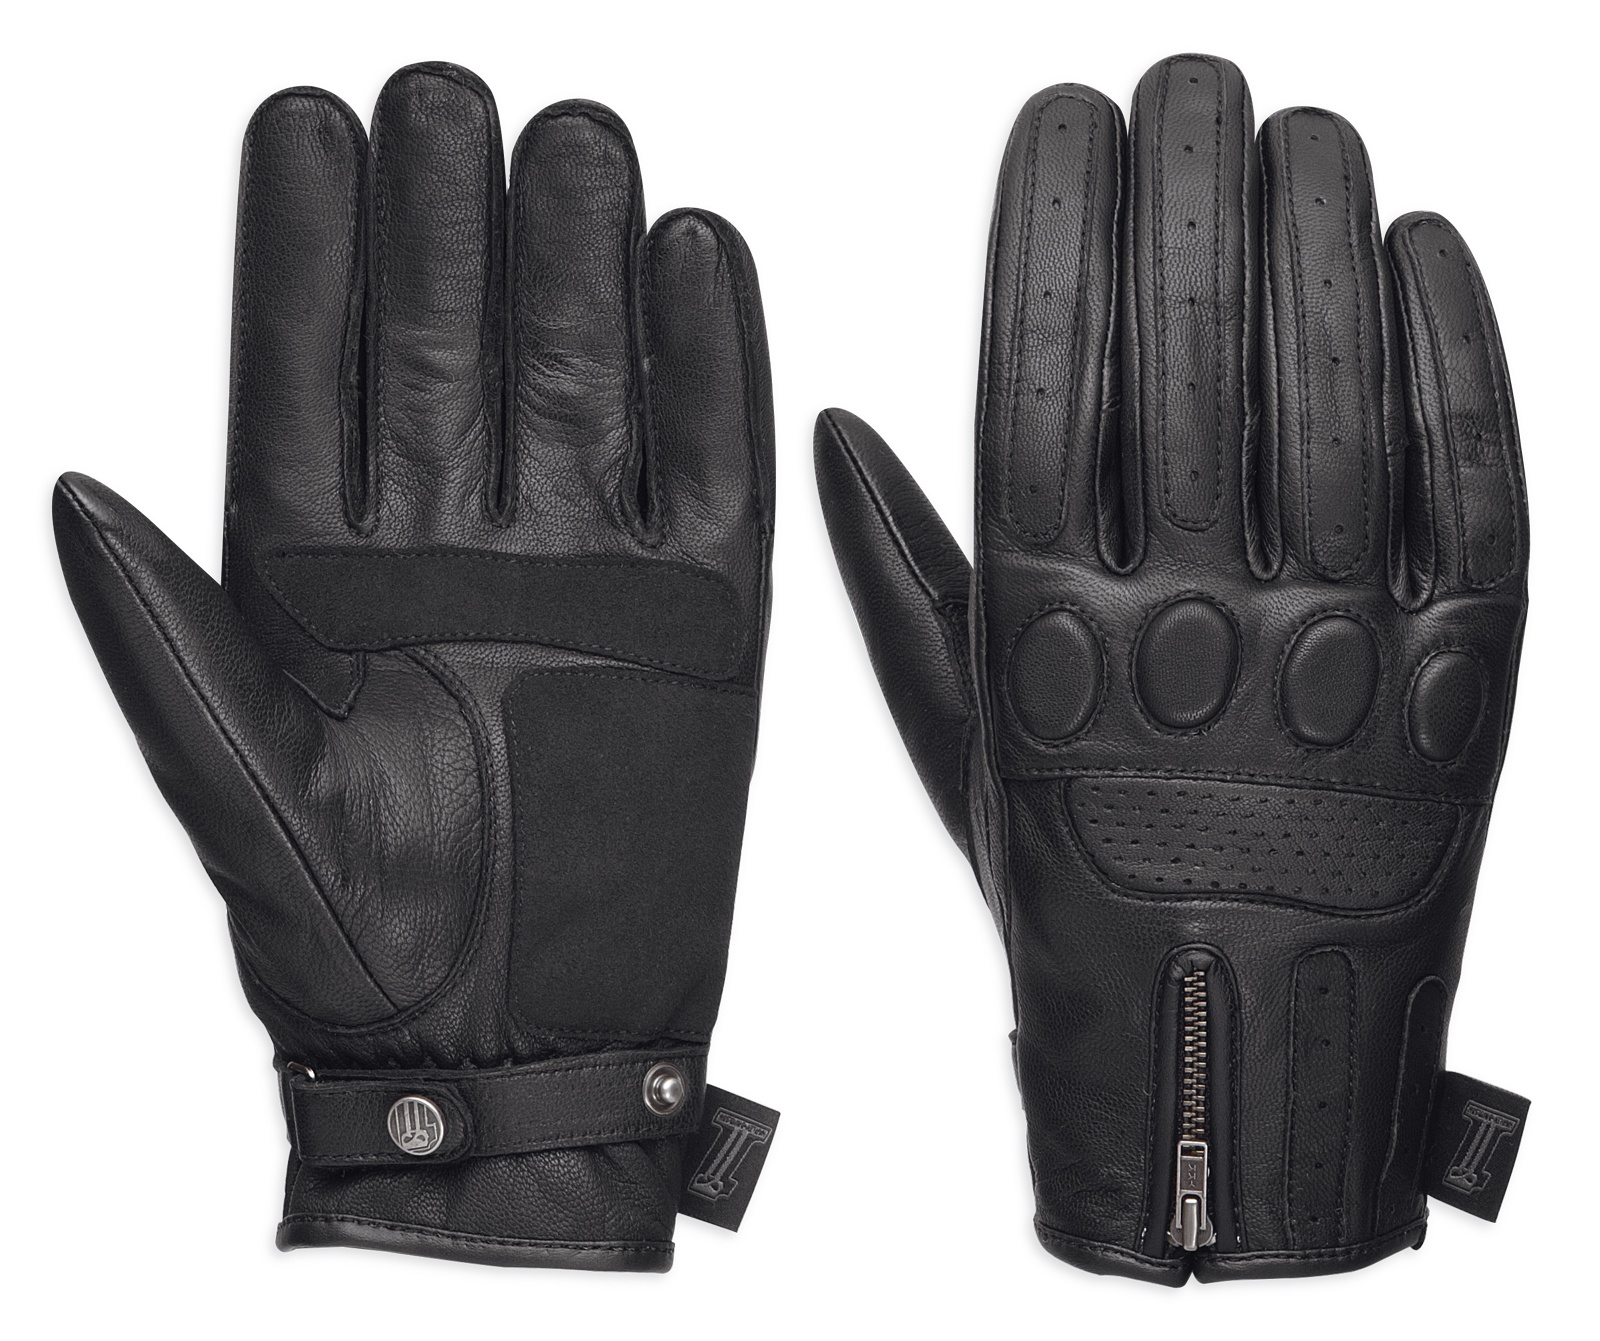 98367 17em Harley Davidson 1 Skull Leather Gloves At Thunderbike Shop